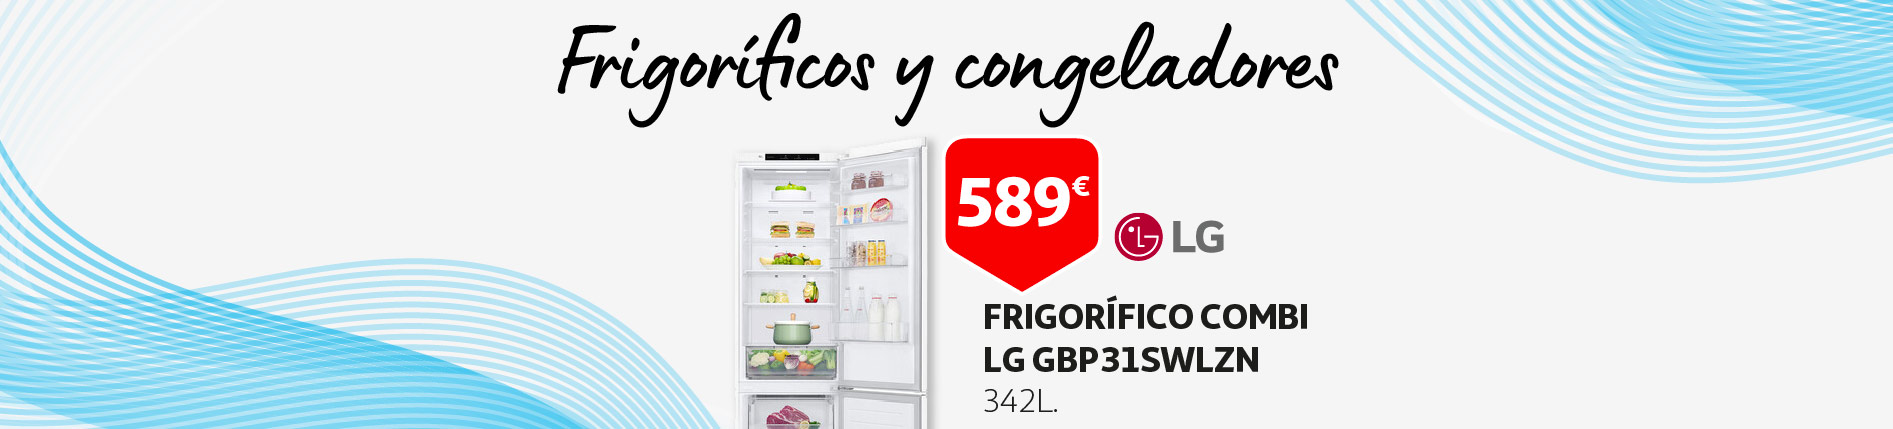 Ofertas frigoríficos - Categorías - Alcampo supermercado online